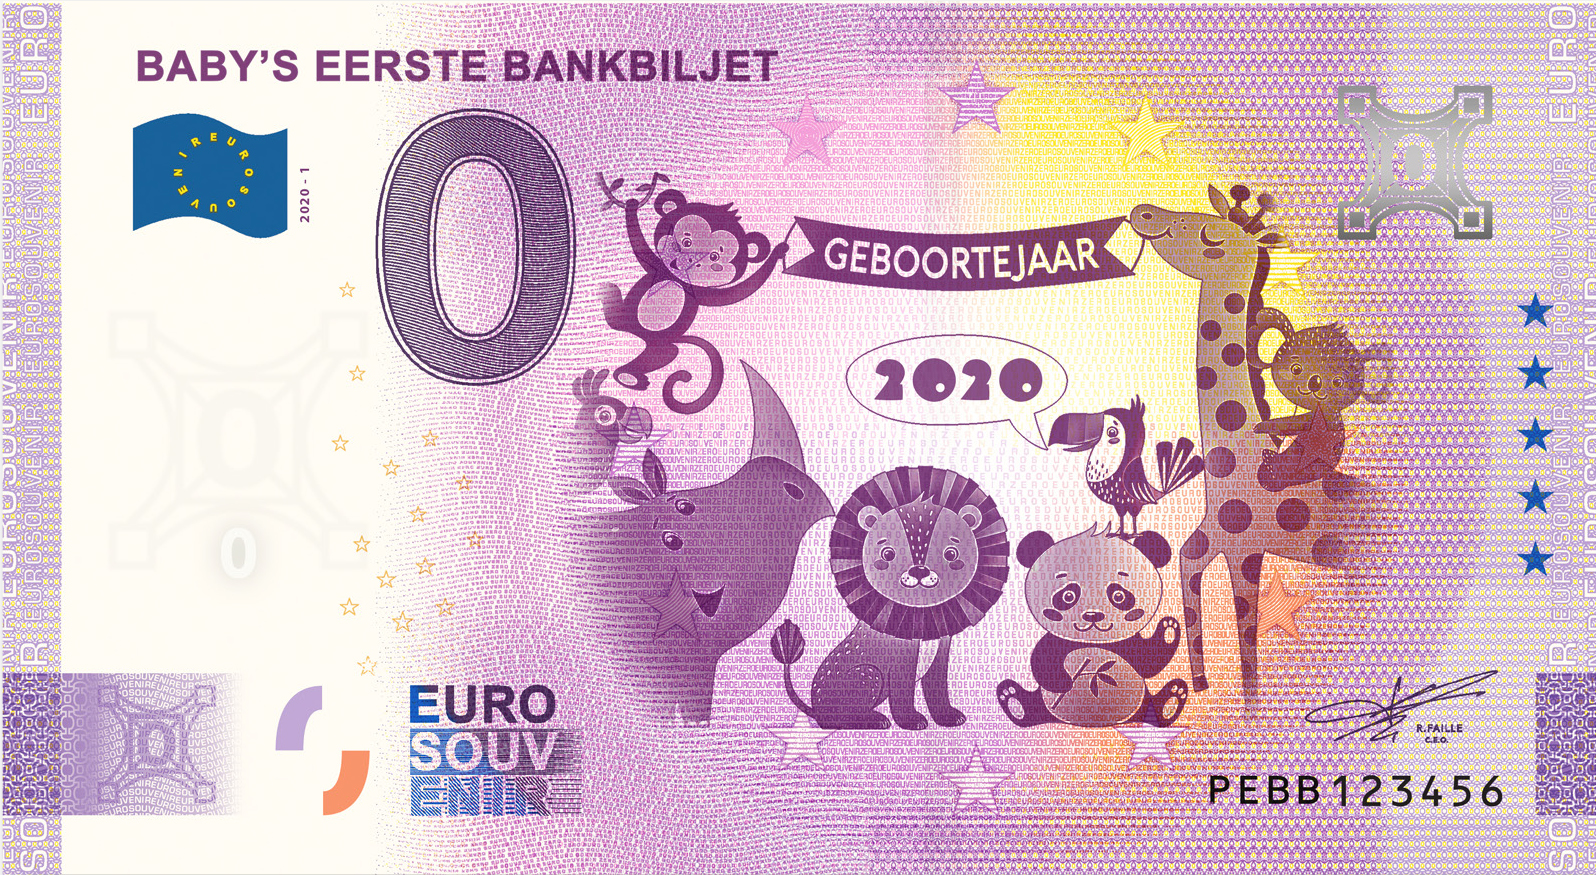 0 Euro souvenir note Nederland 2020 - Baby's eerste bankbiljet in cadeausleeve meisje